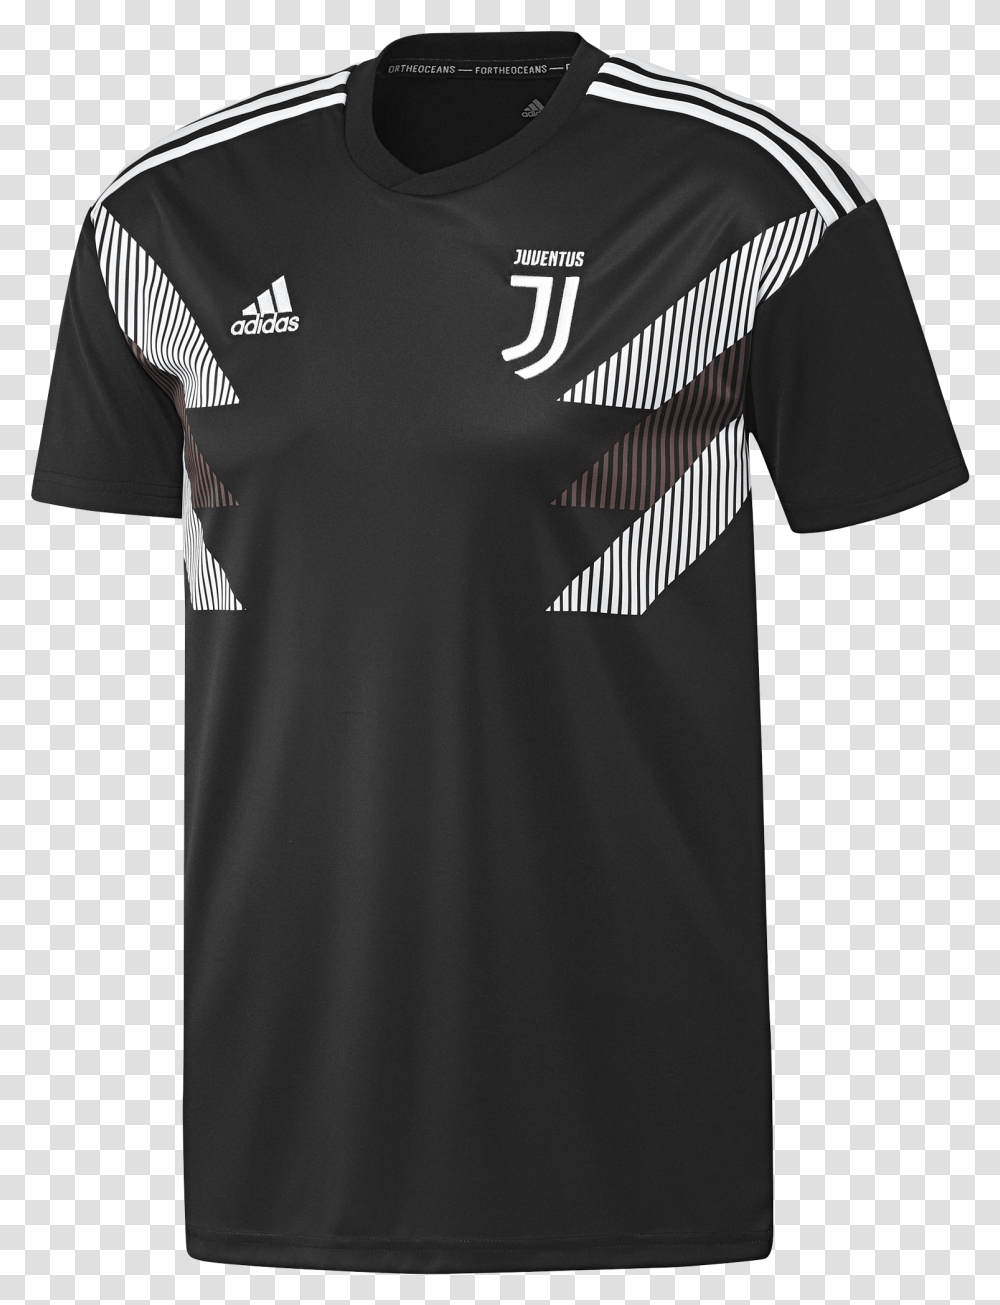 Login Into Your Account Juventus Camiseta Blanco Y Negro, Apparel, Sleeve, Shirt Transparent Png